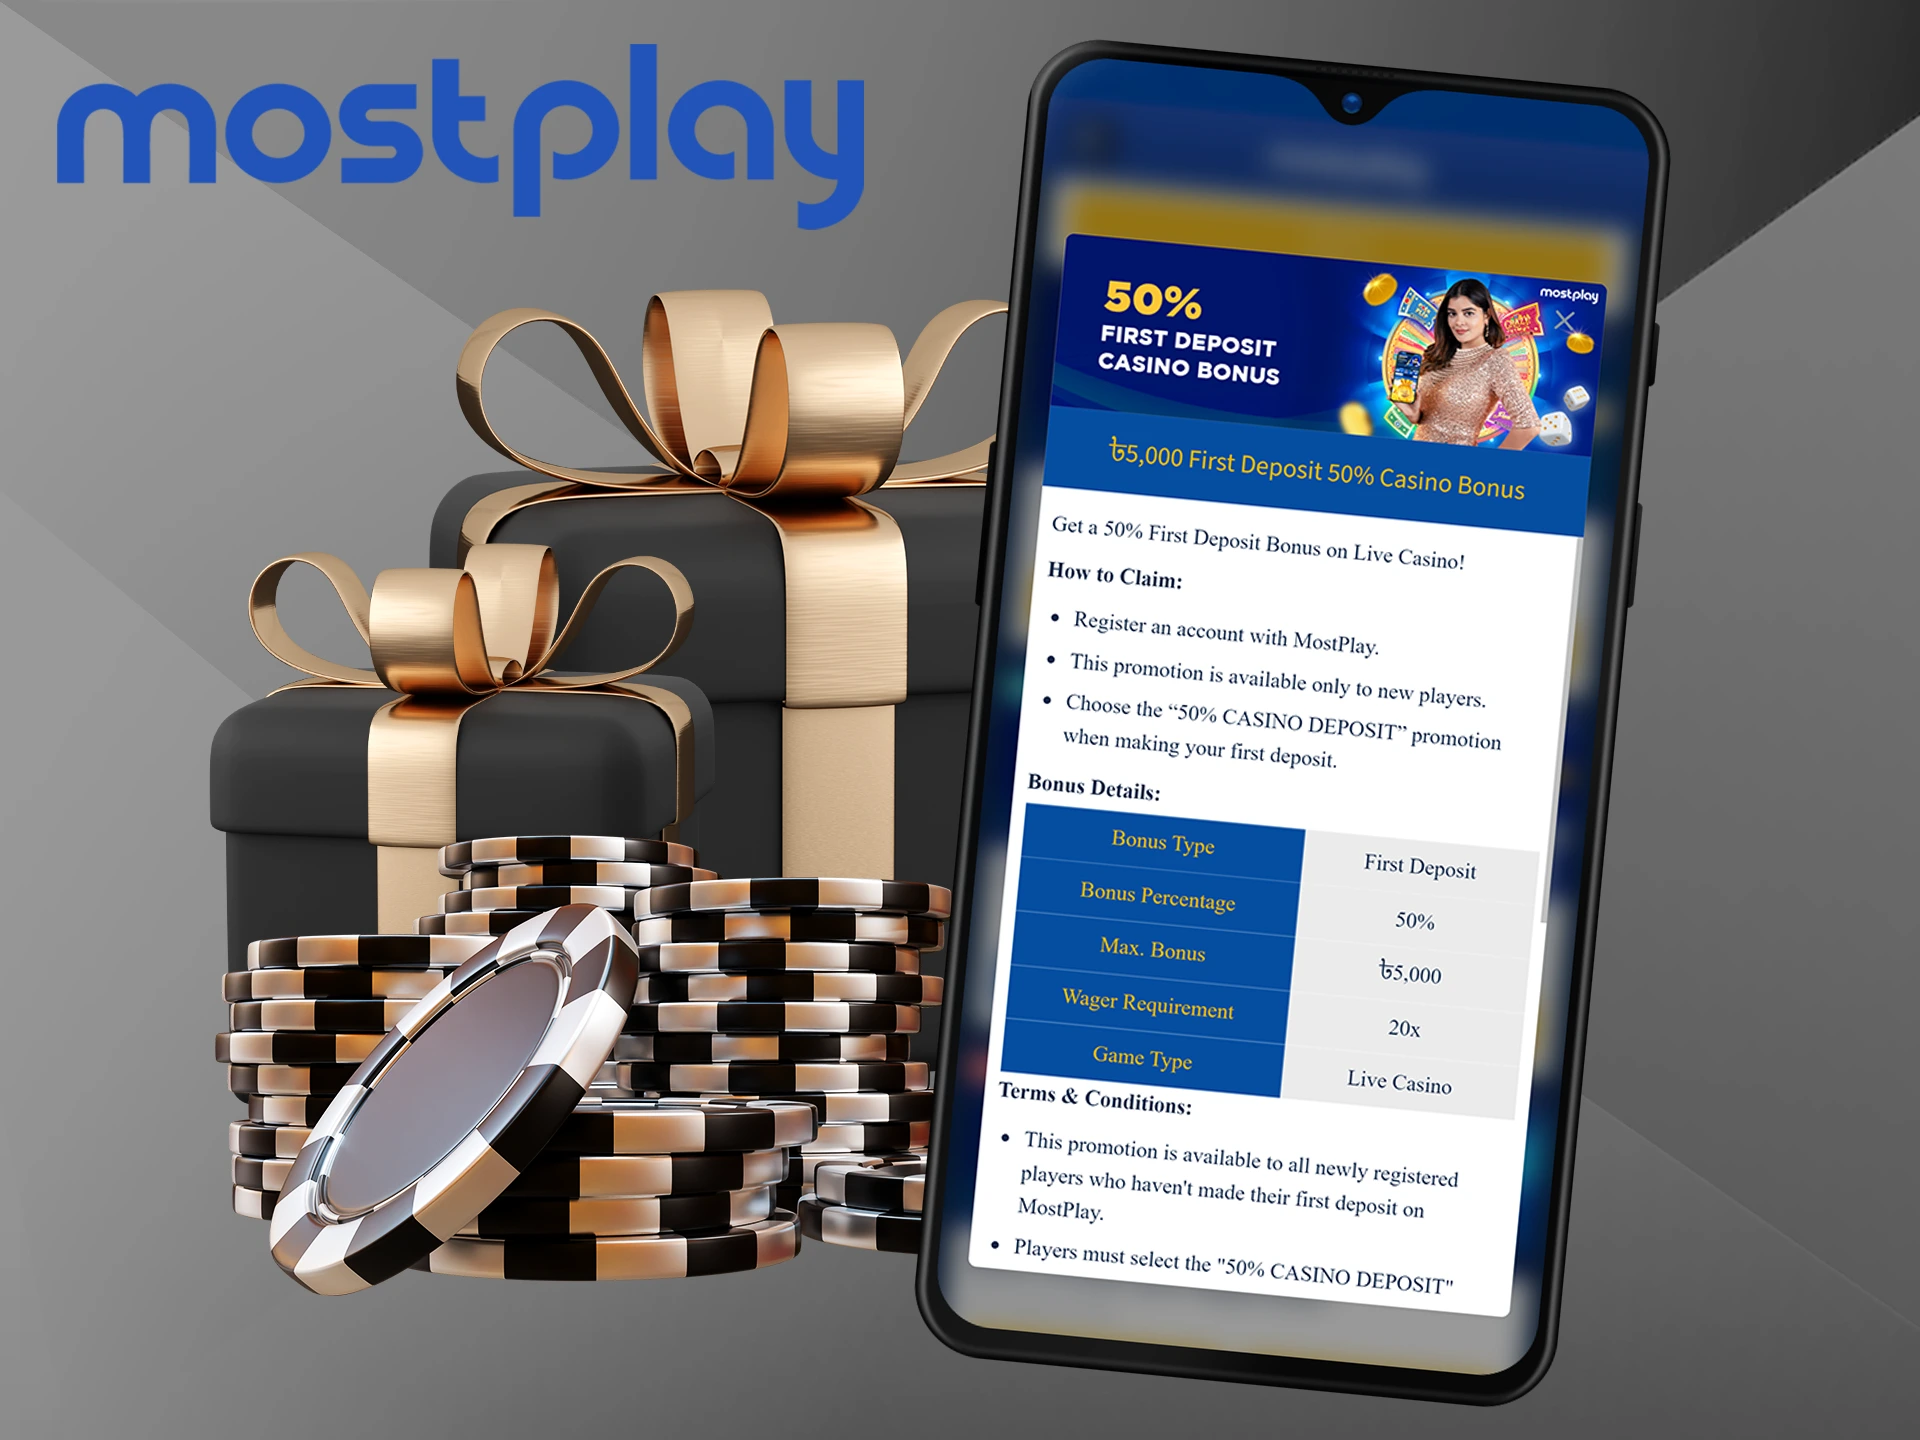 Make a deposit and enjoy live casino games with Mostplay bonus.